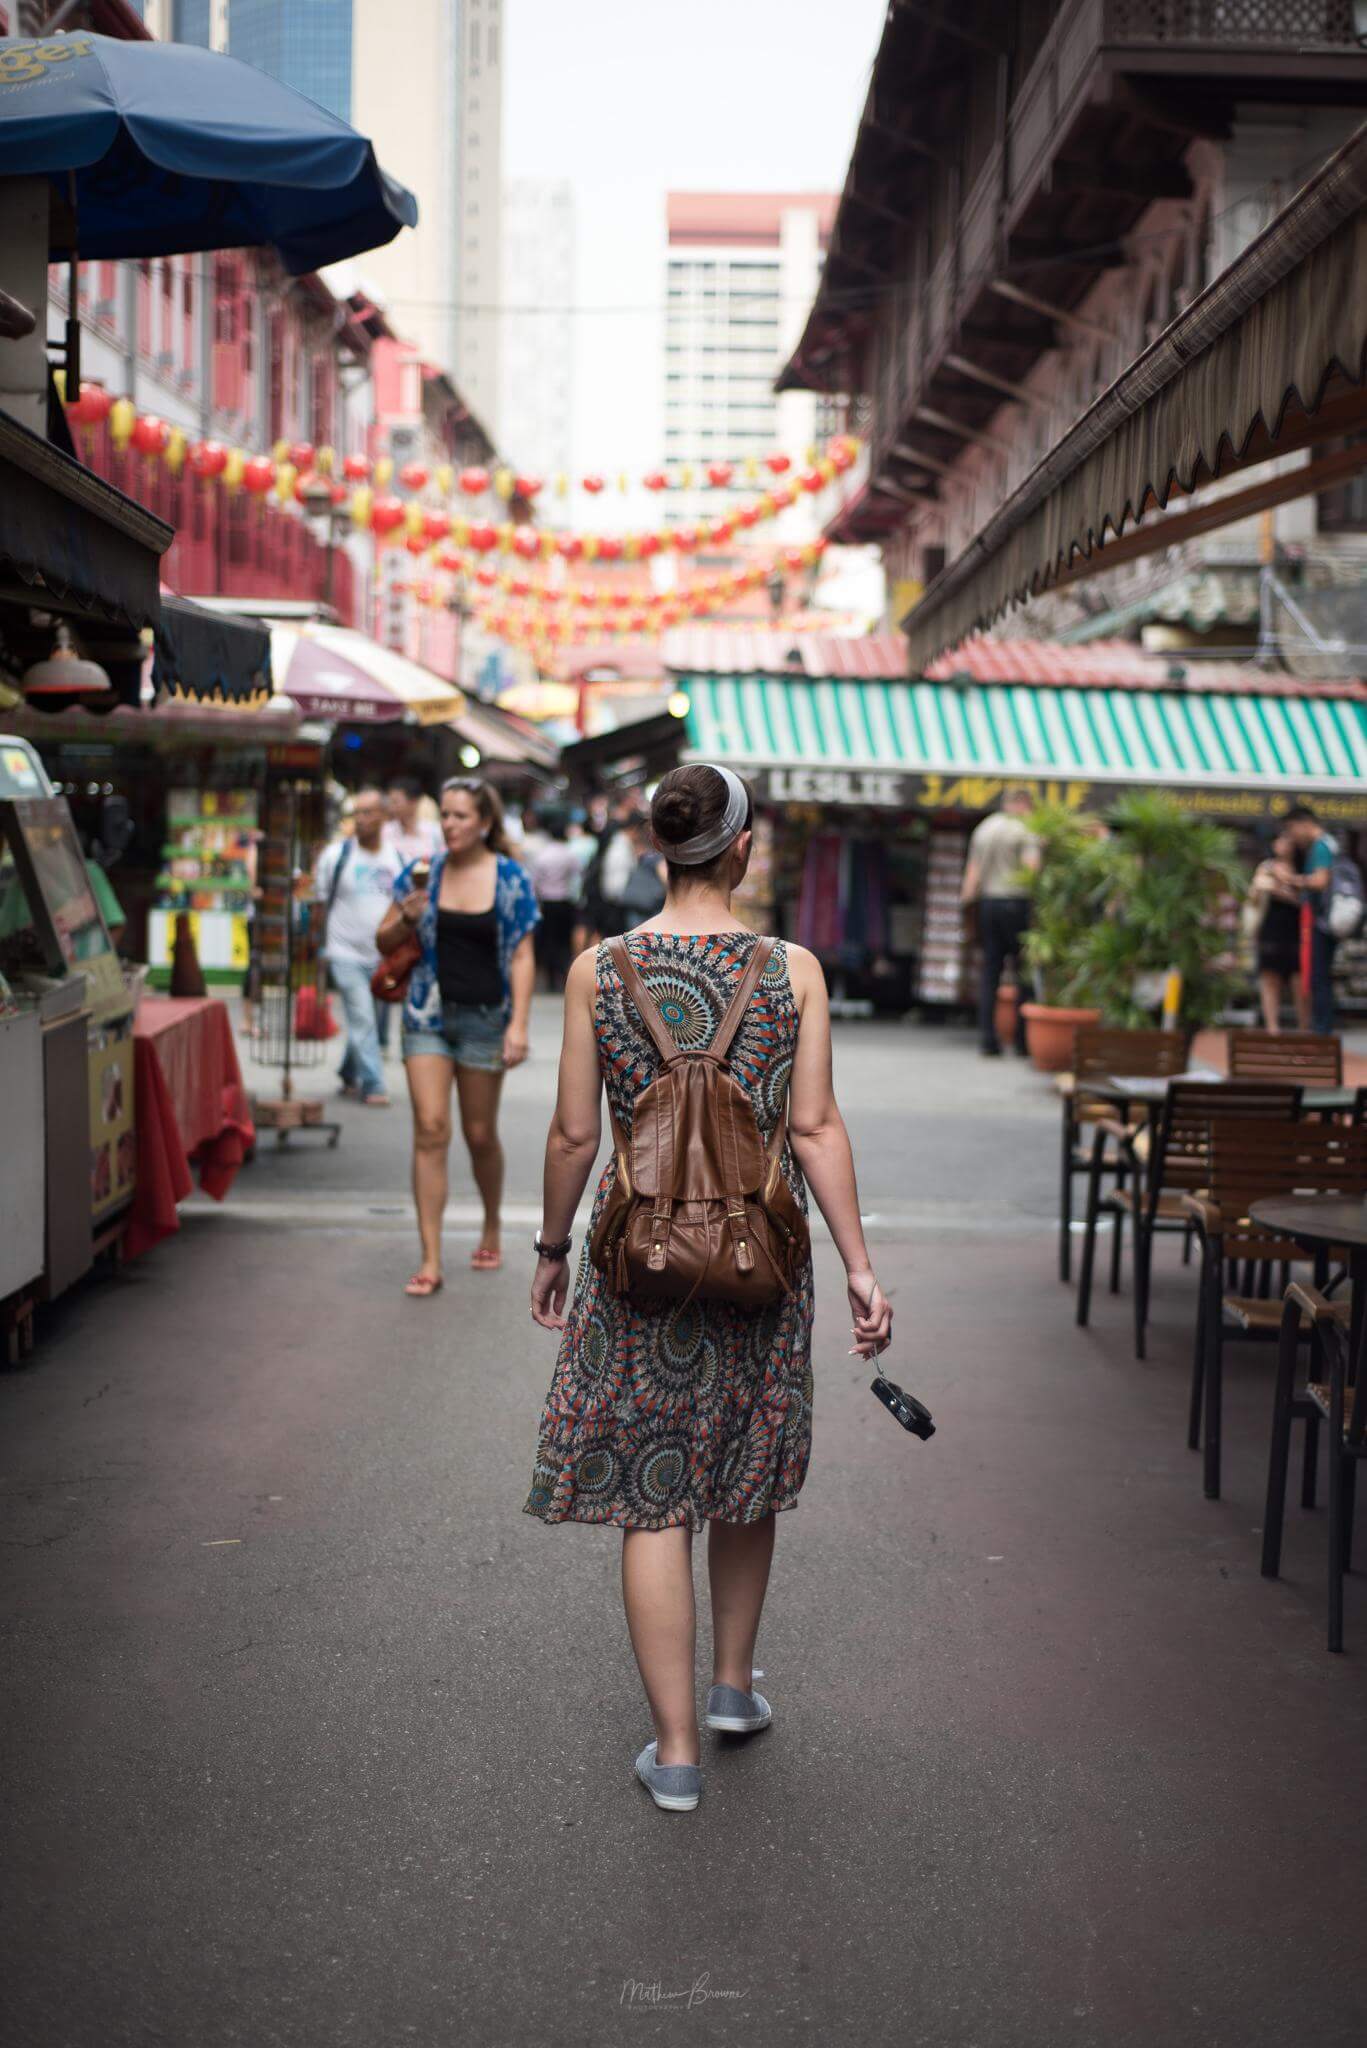 Singapore images - Chinatown